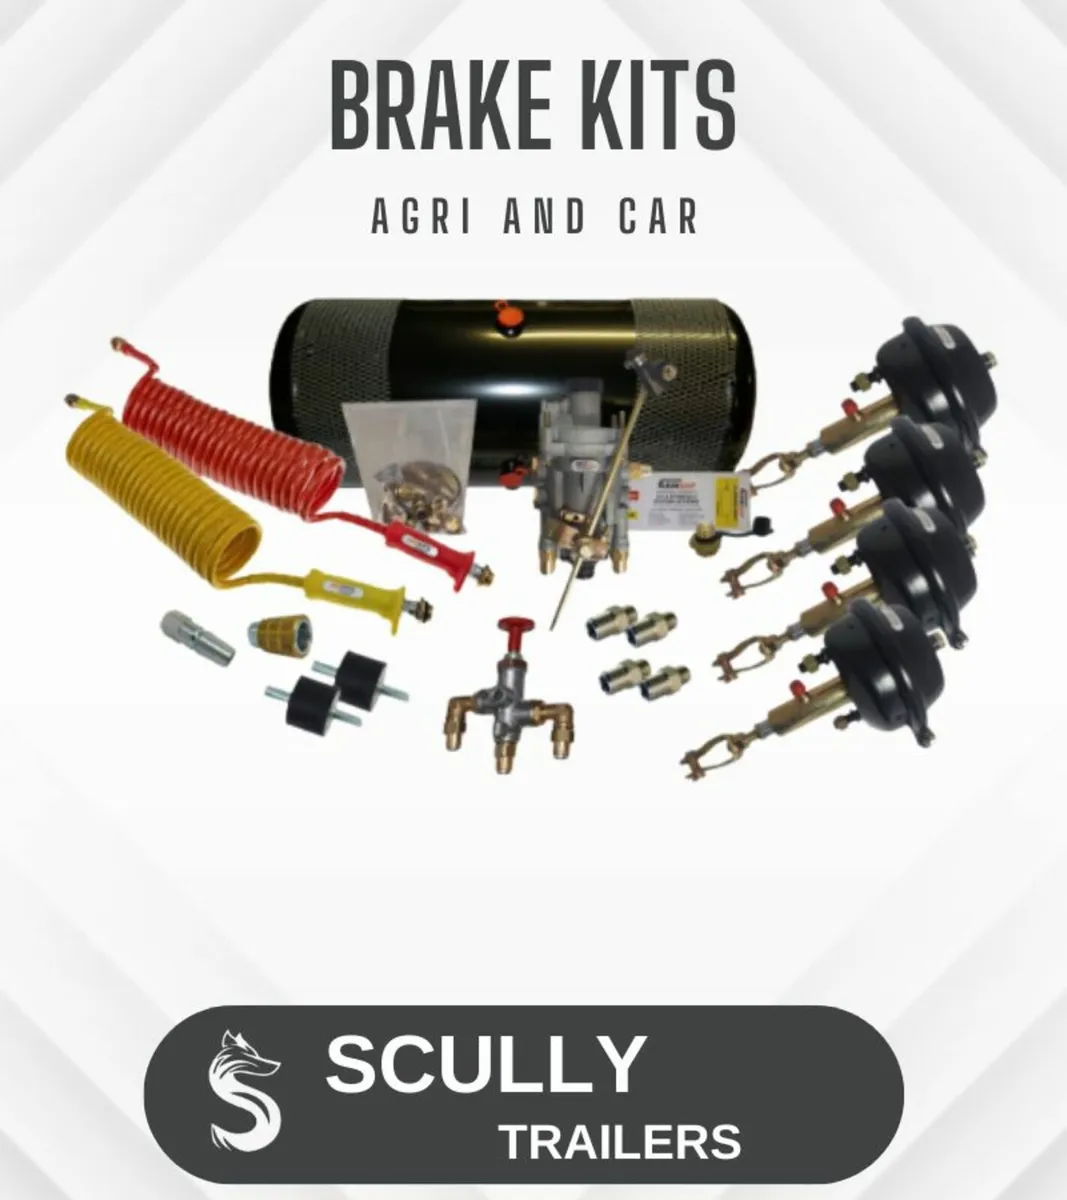 Tools | Parts | Consumables | kits | More